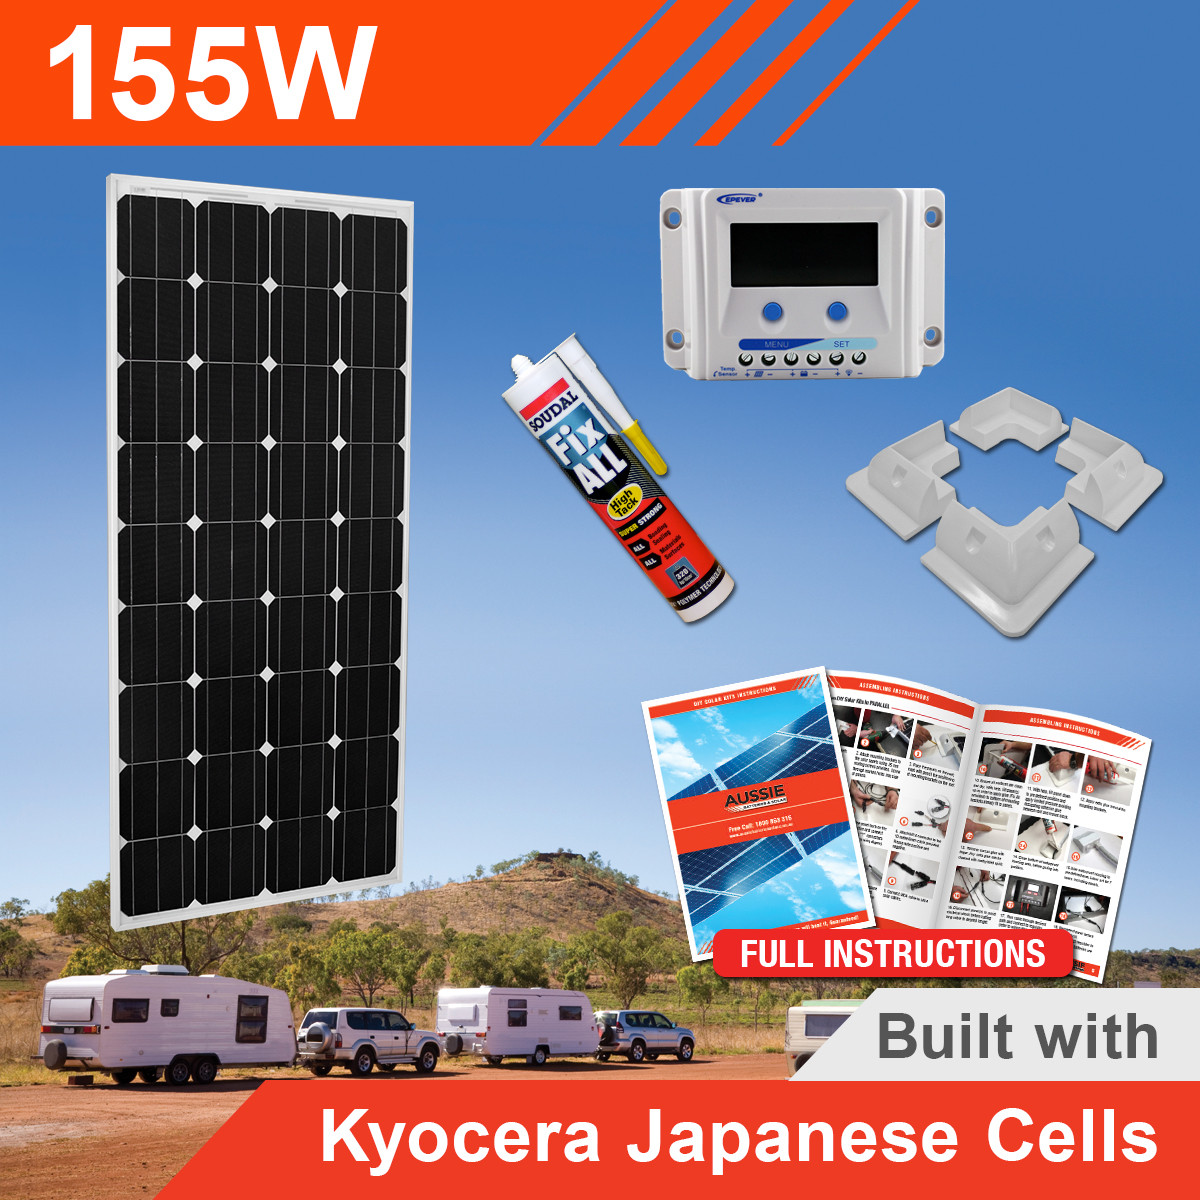 Best ideas about DIY Solar Kit
. Save or Pin 155W 12V plete DIY Solar Kit Now.